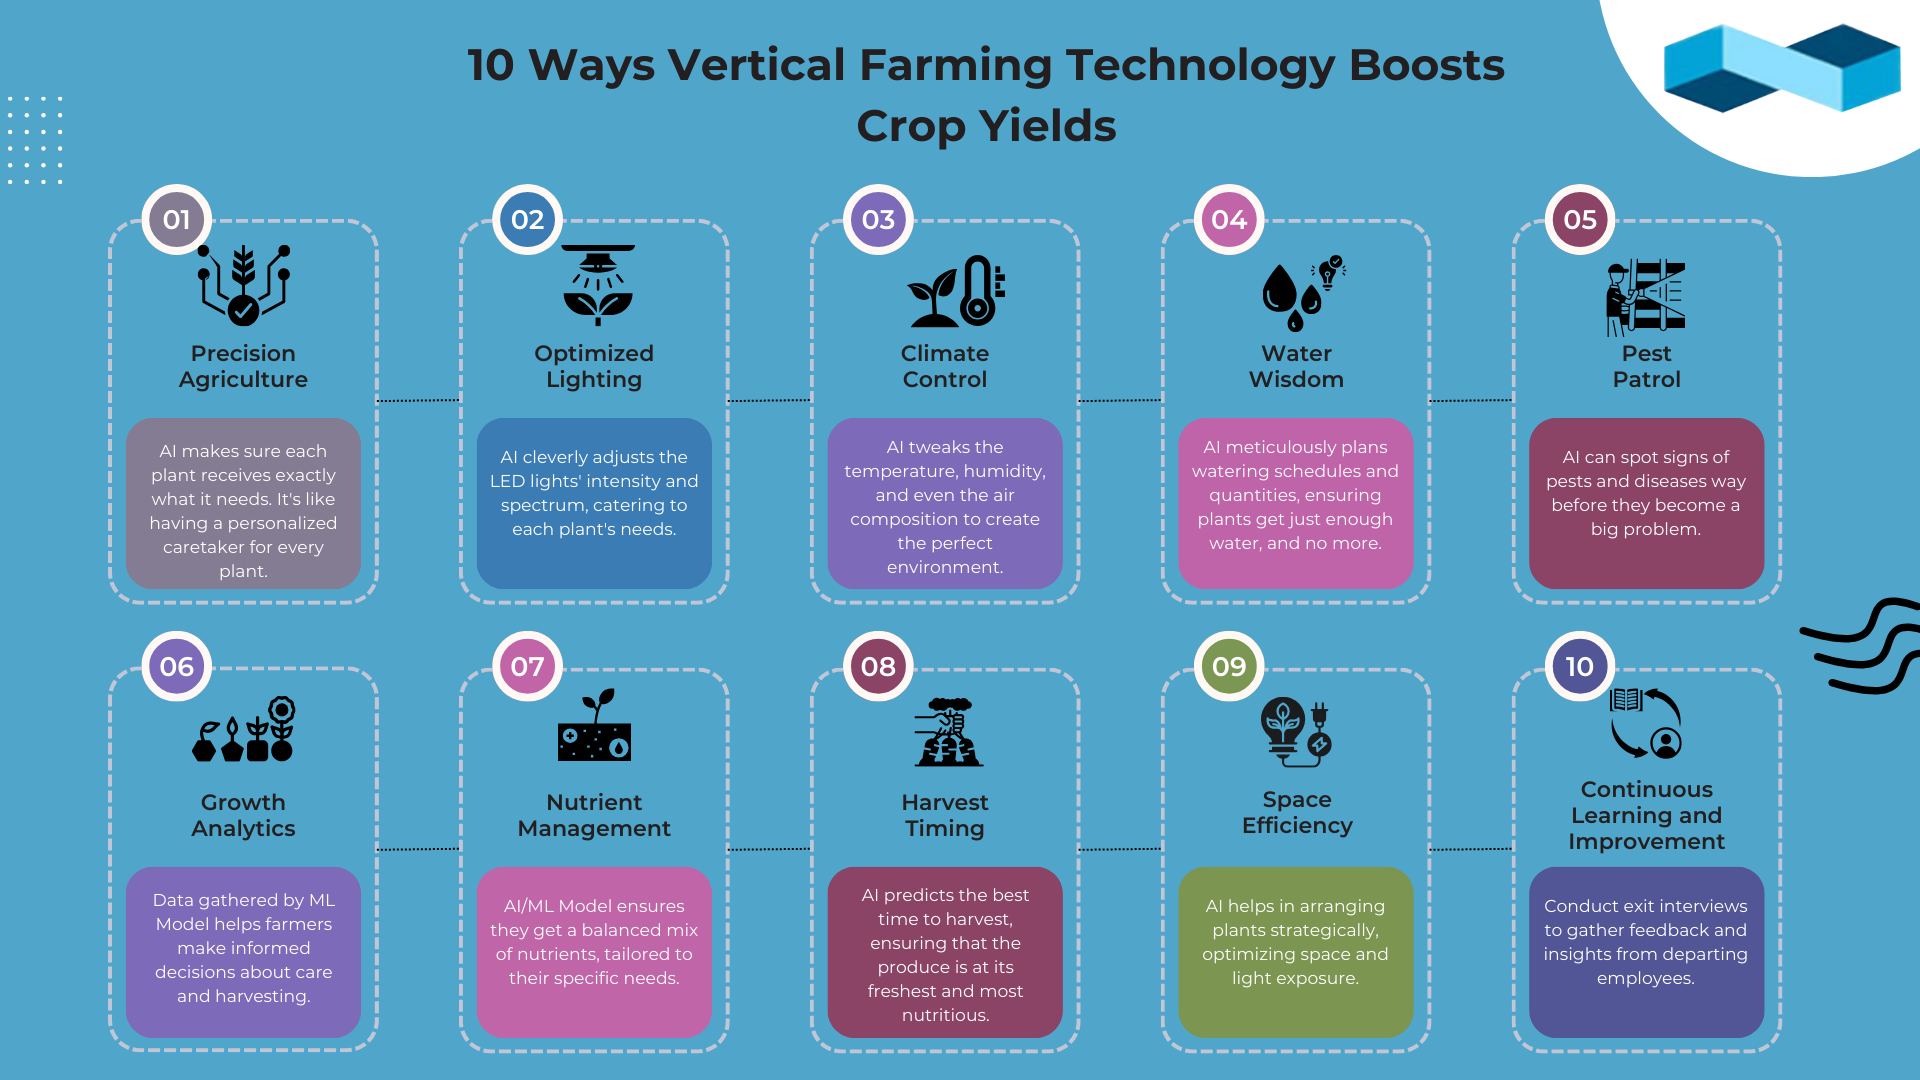 10 ways vertical farming technology boosts crop yields.